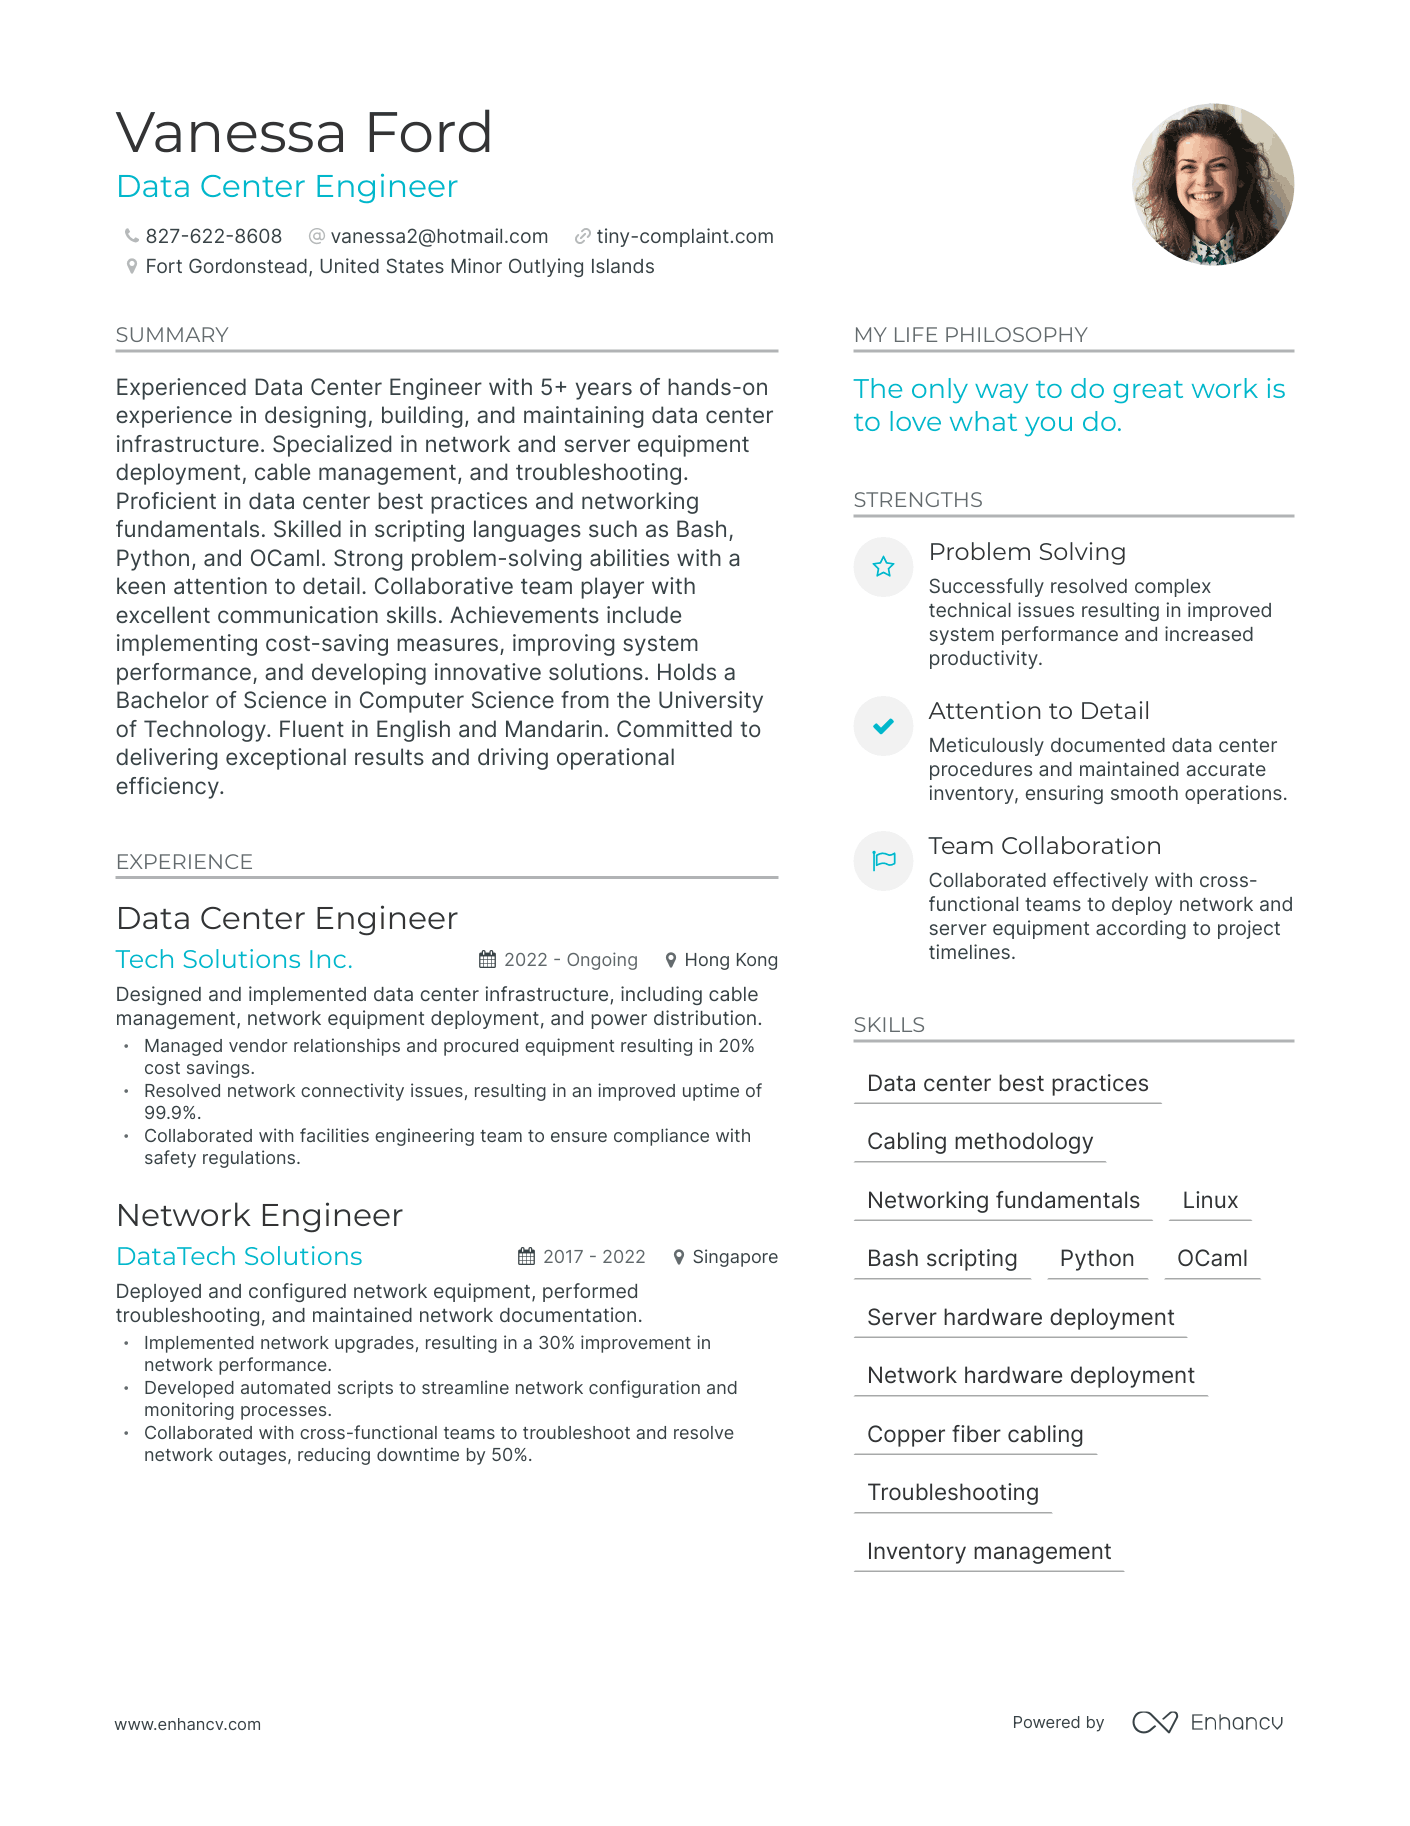 Data Center Engineer resume example